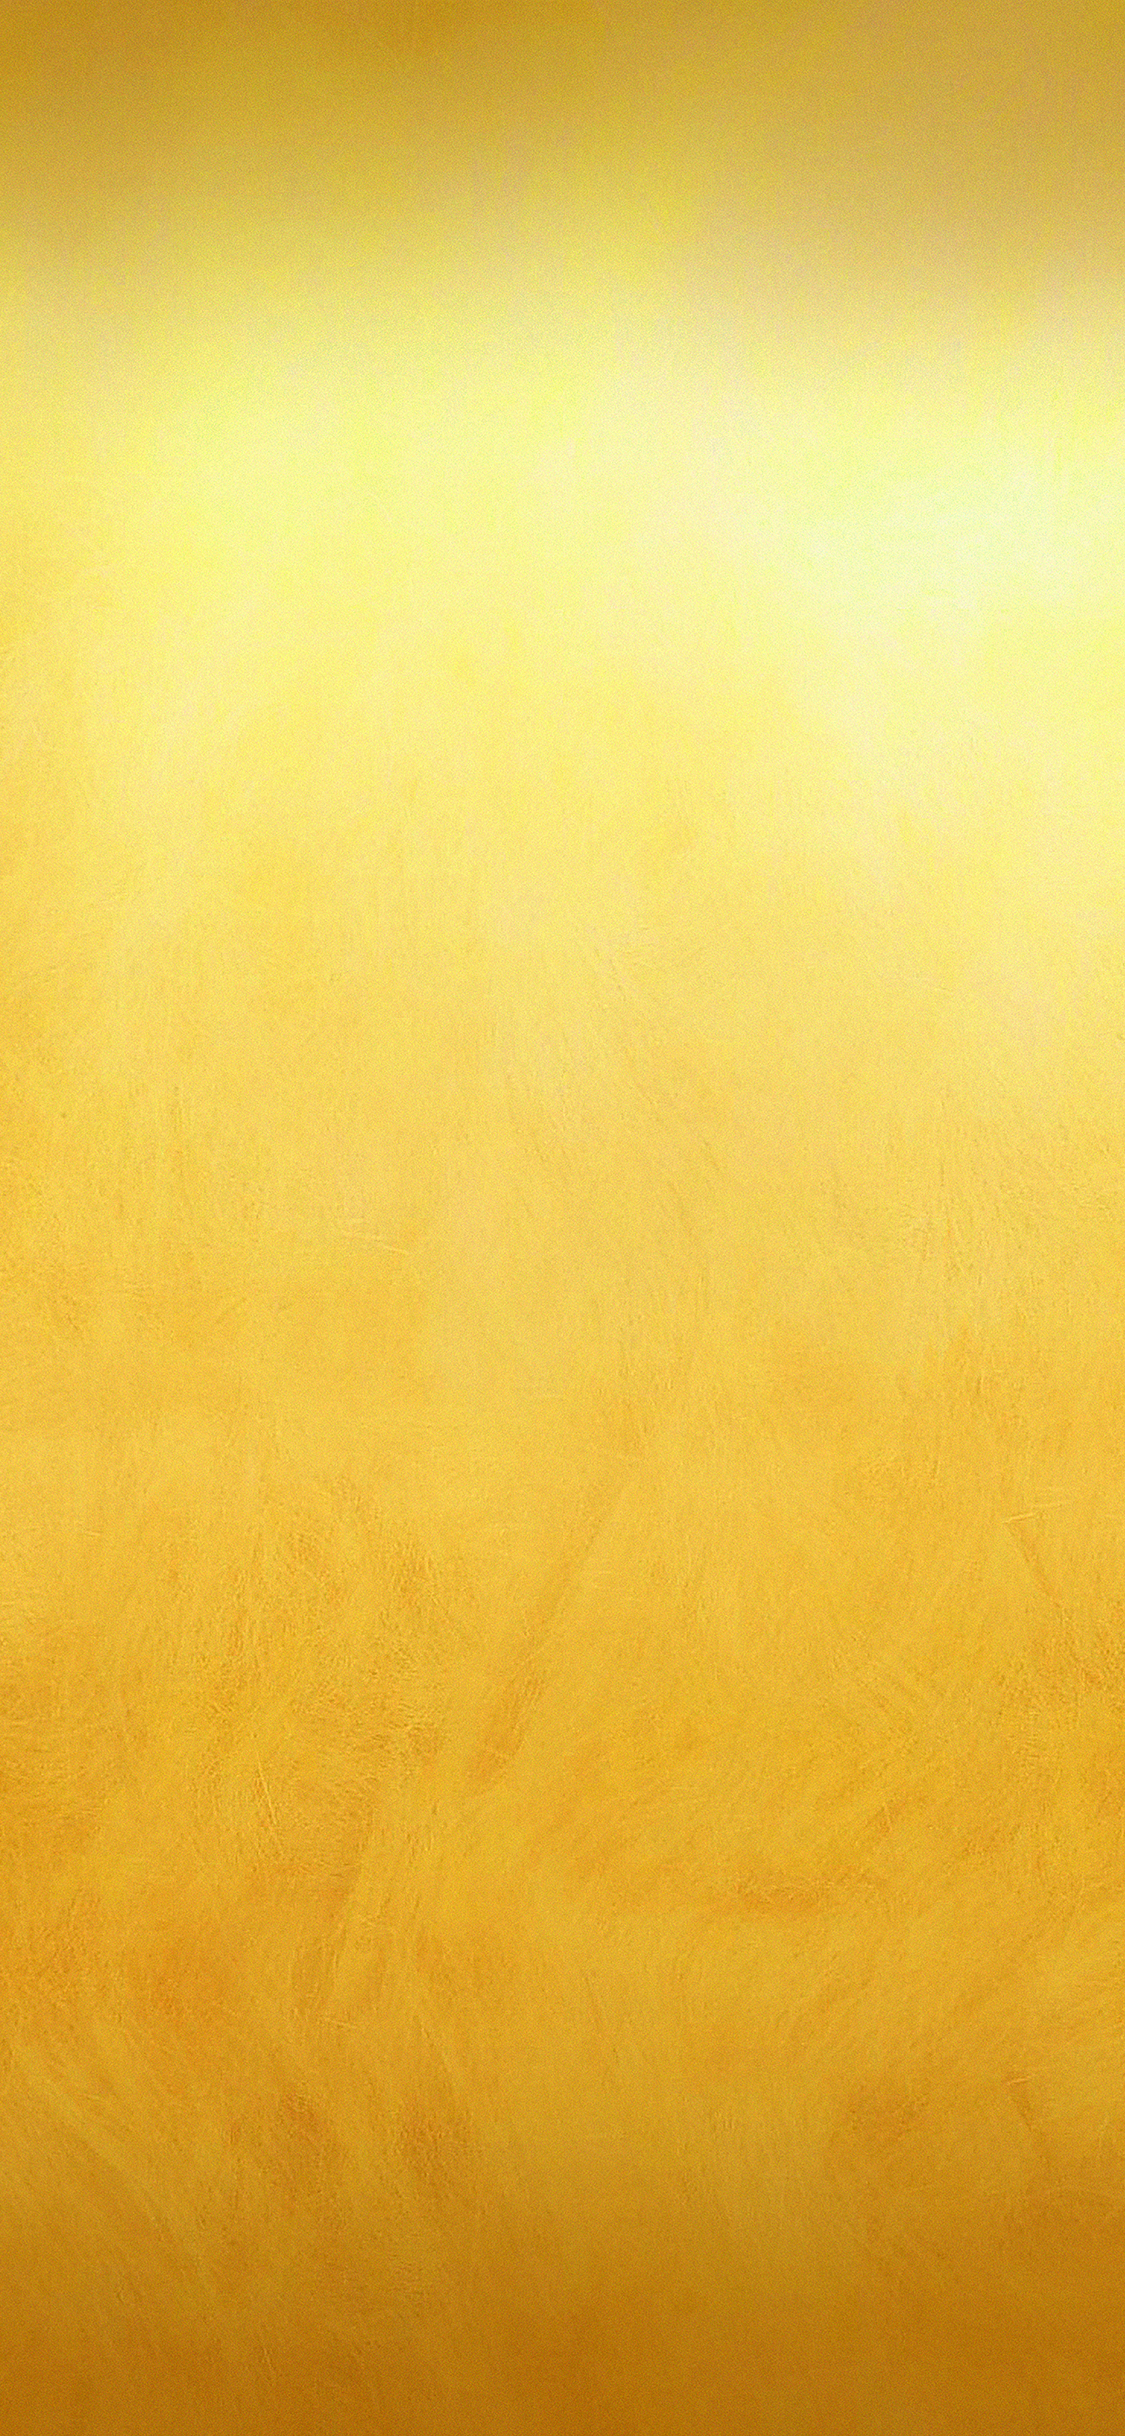 wallpaper astratto carta ocean gold pattern